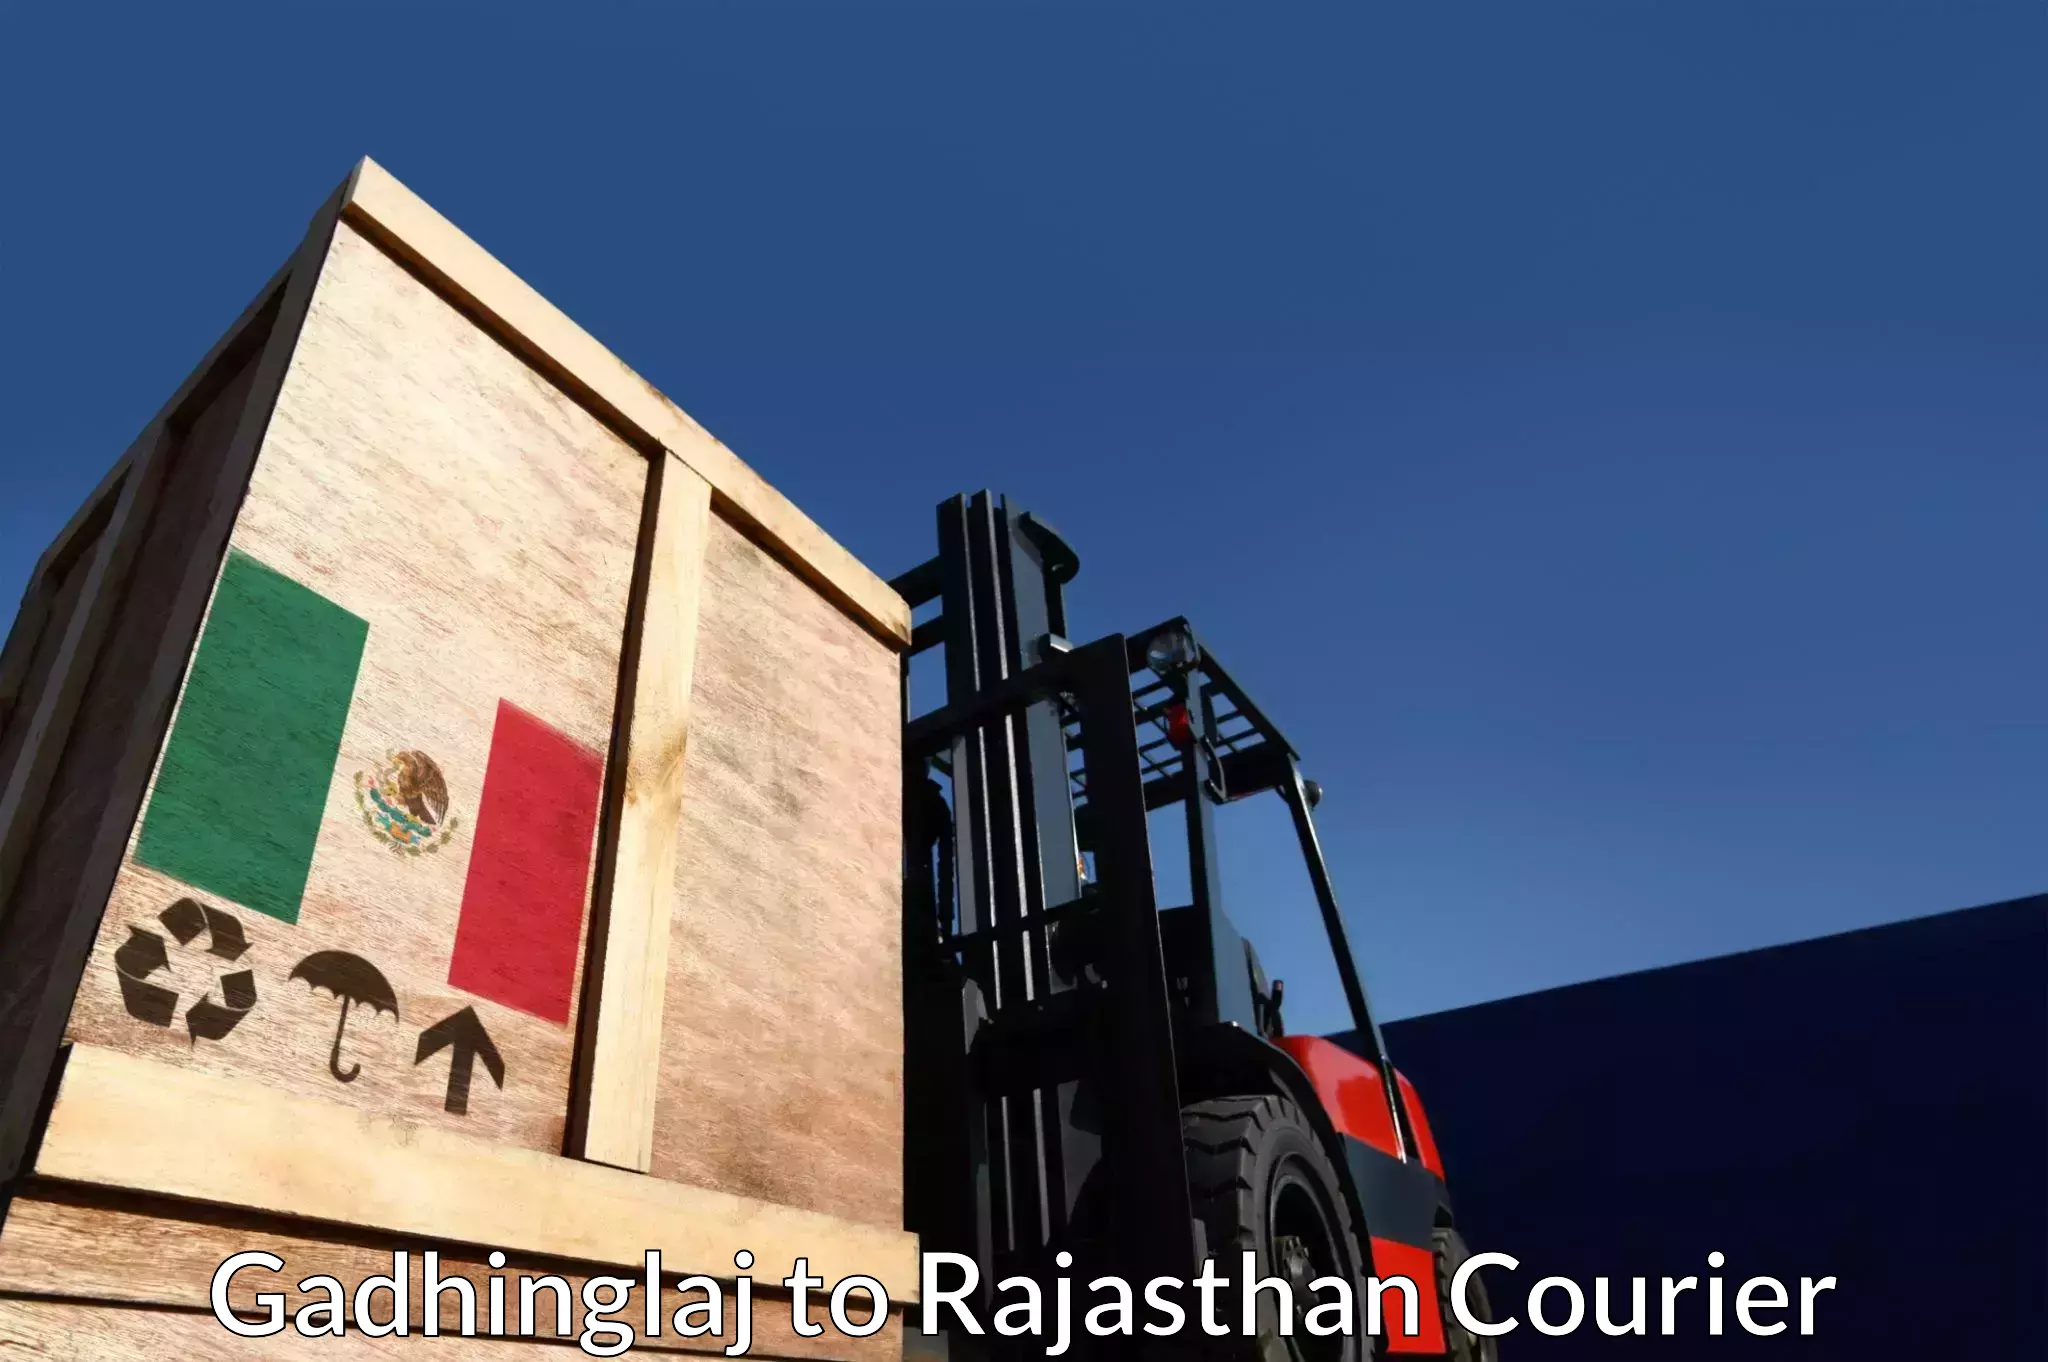 Reliable delivery network Gadhinglaj to Rajasthan